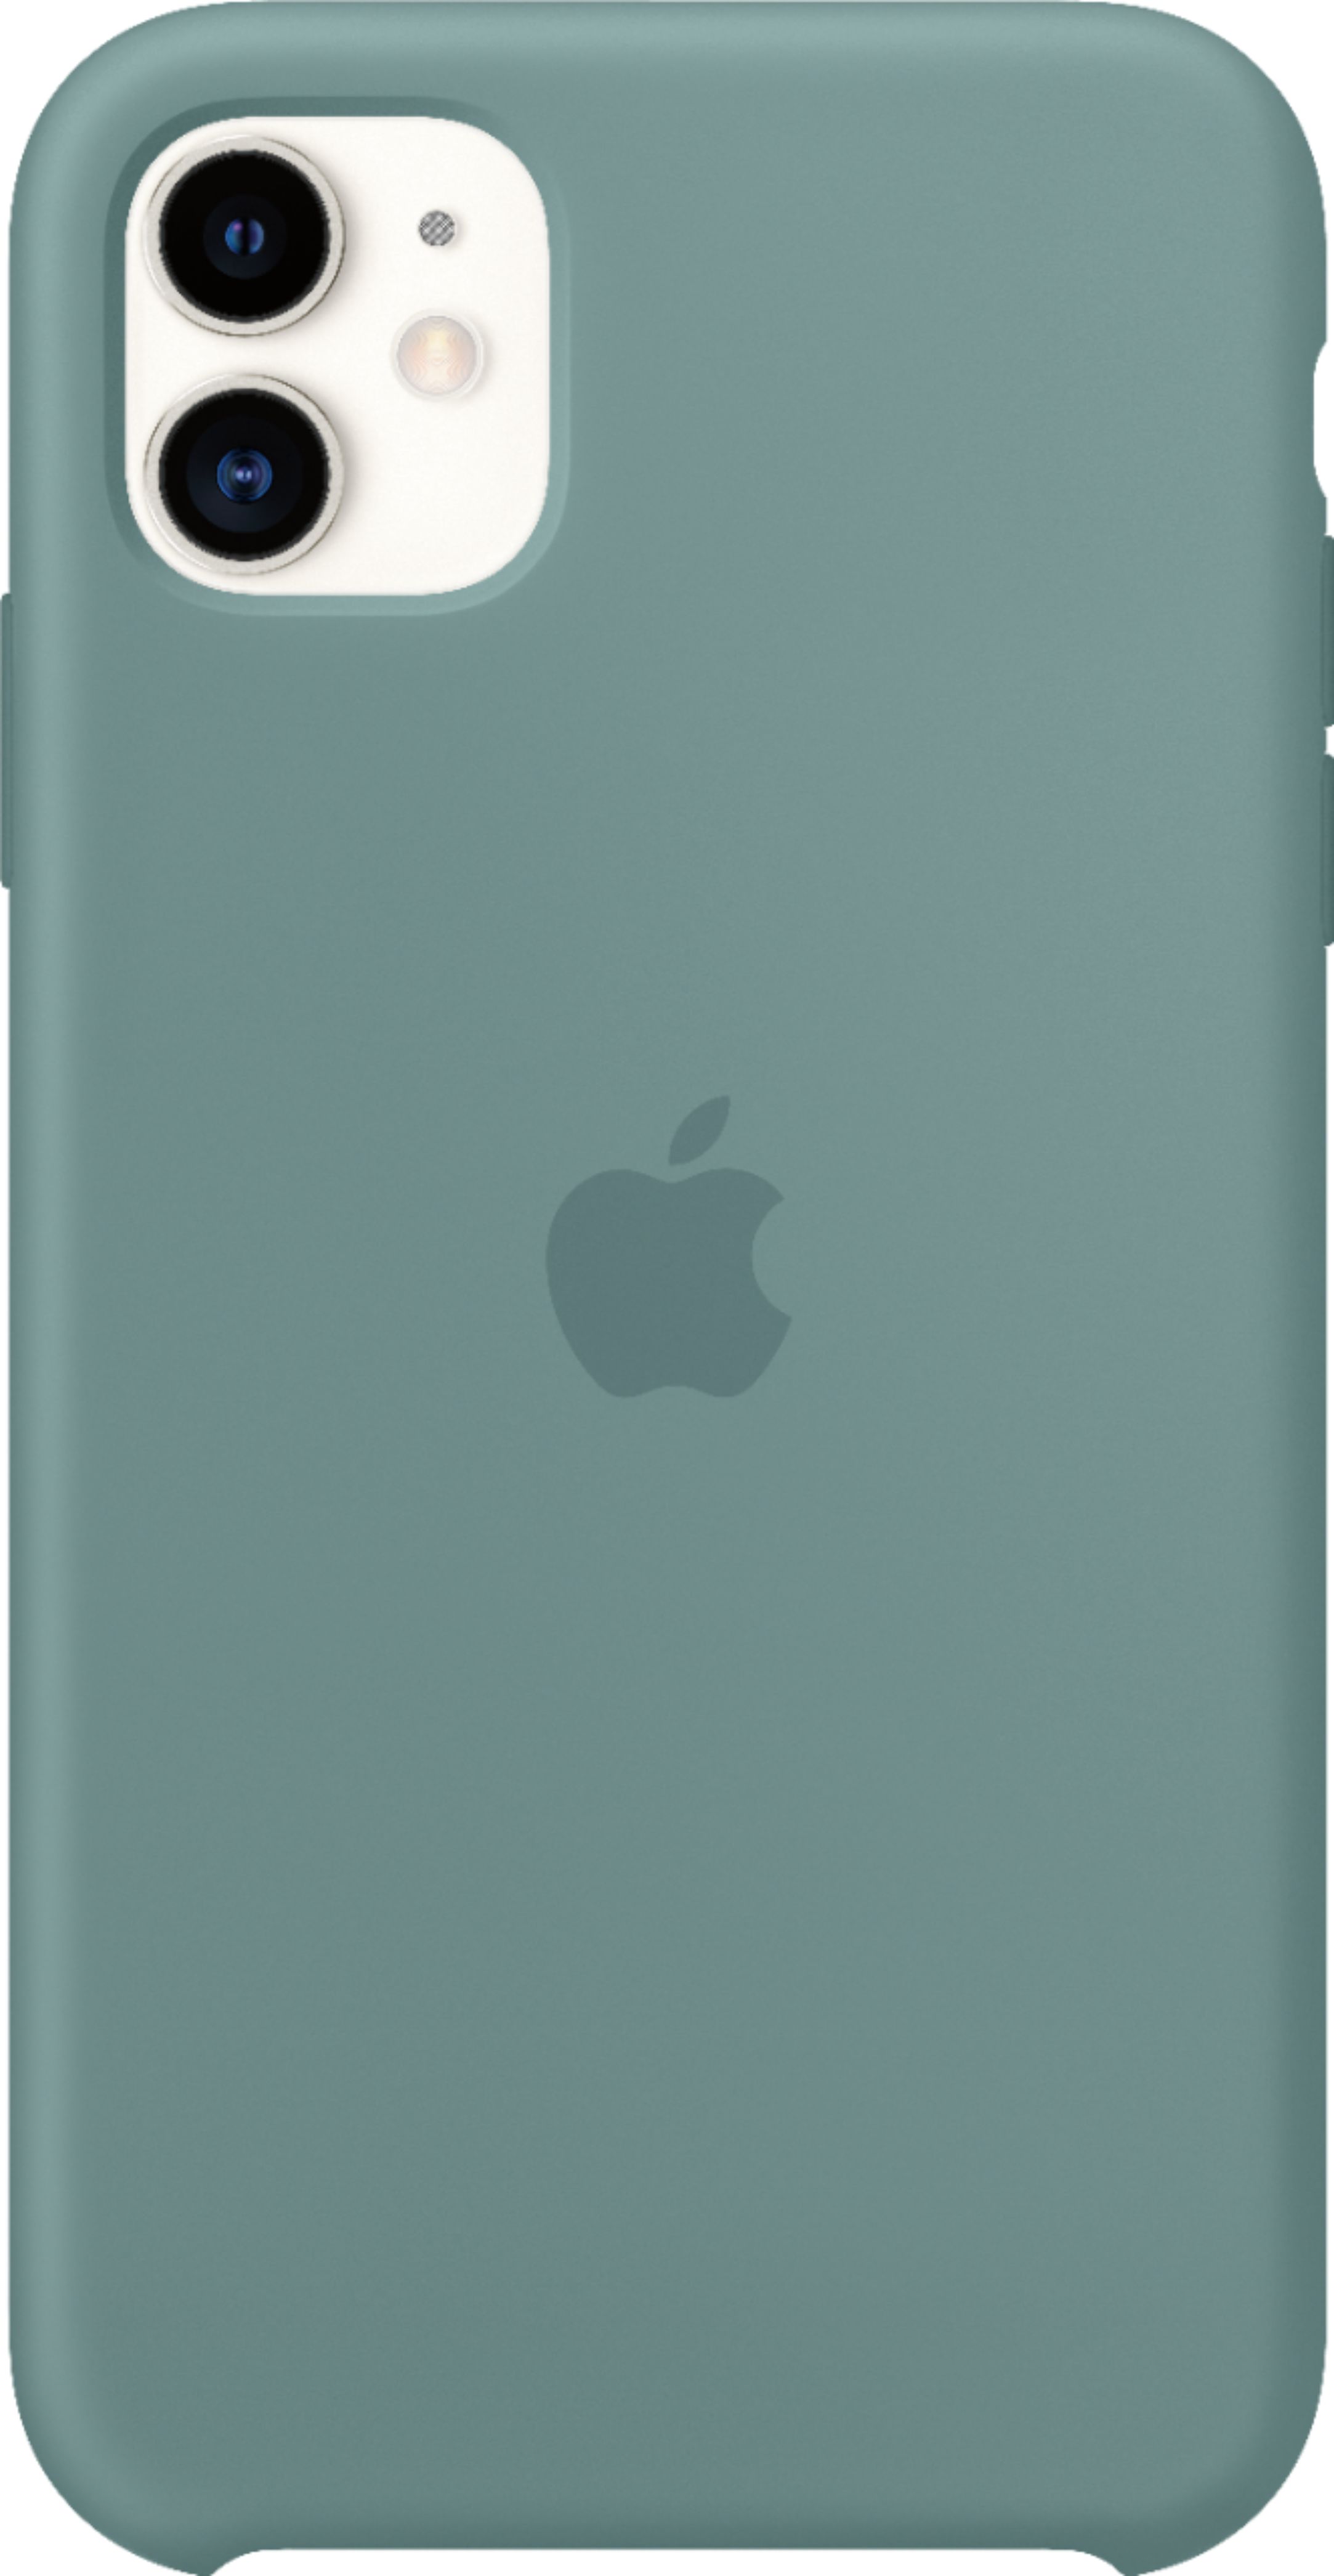 Best Buy Apple Iphone 11 Silicone Case Cactus Apple2020 Accessory 33